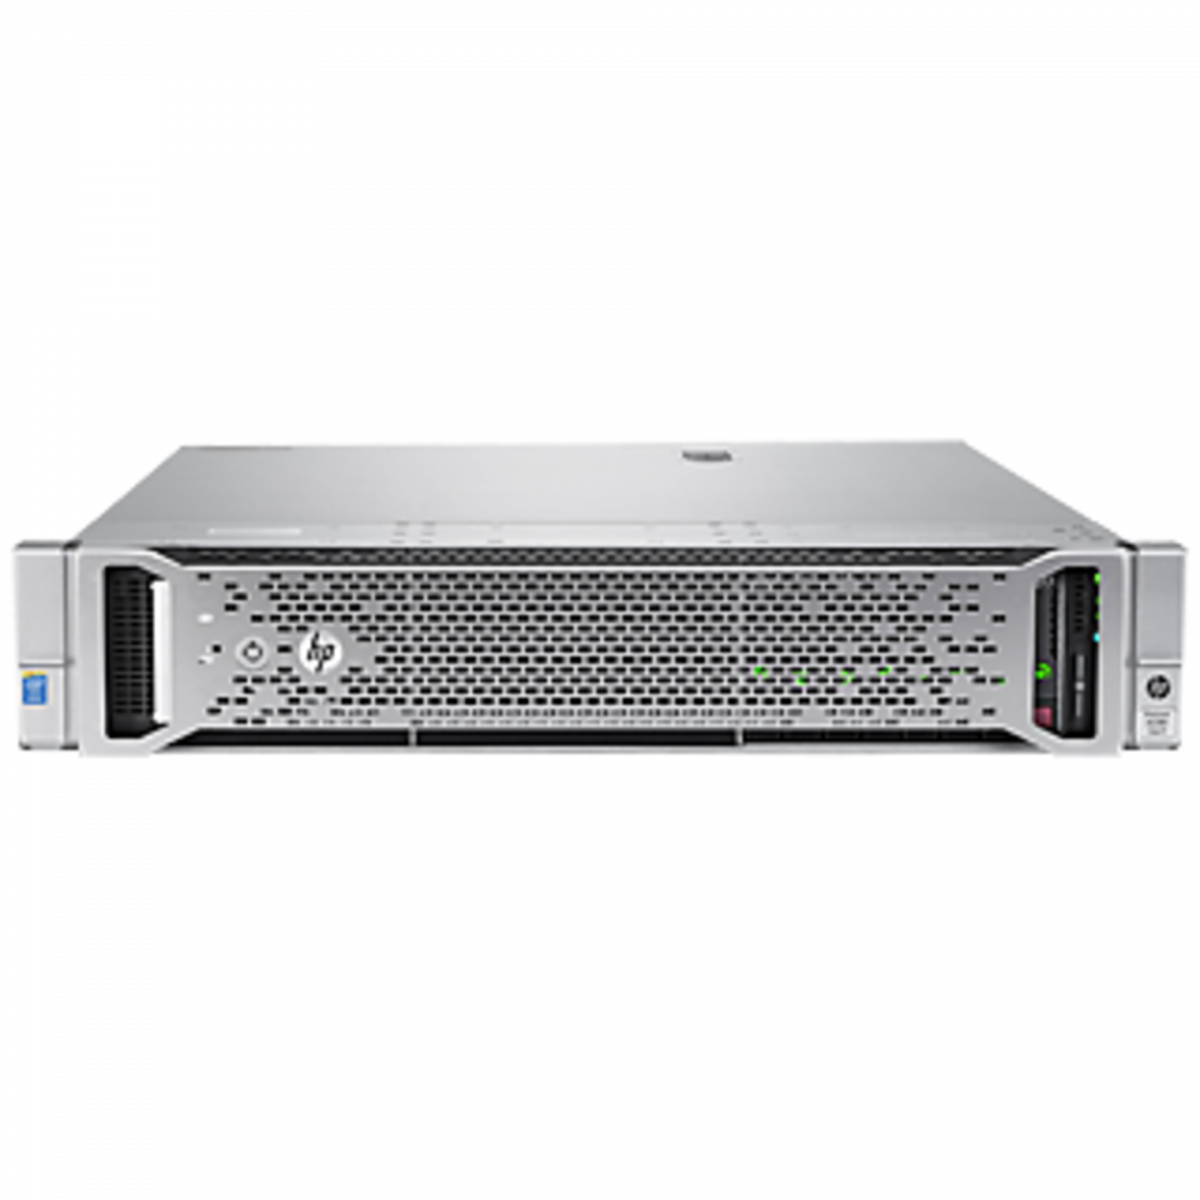 Сервер HP Proliant DL380 Gen9, 2 процессора Intel Xeon 12C E5-2678v3, 64GB DRAM, 8SFF, P440ar/2GB FBWC